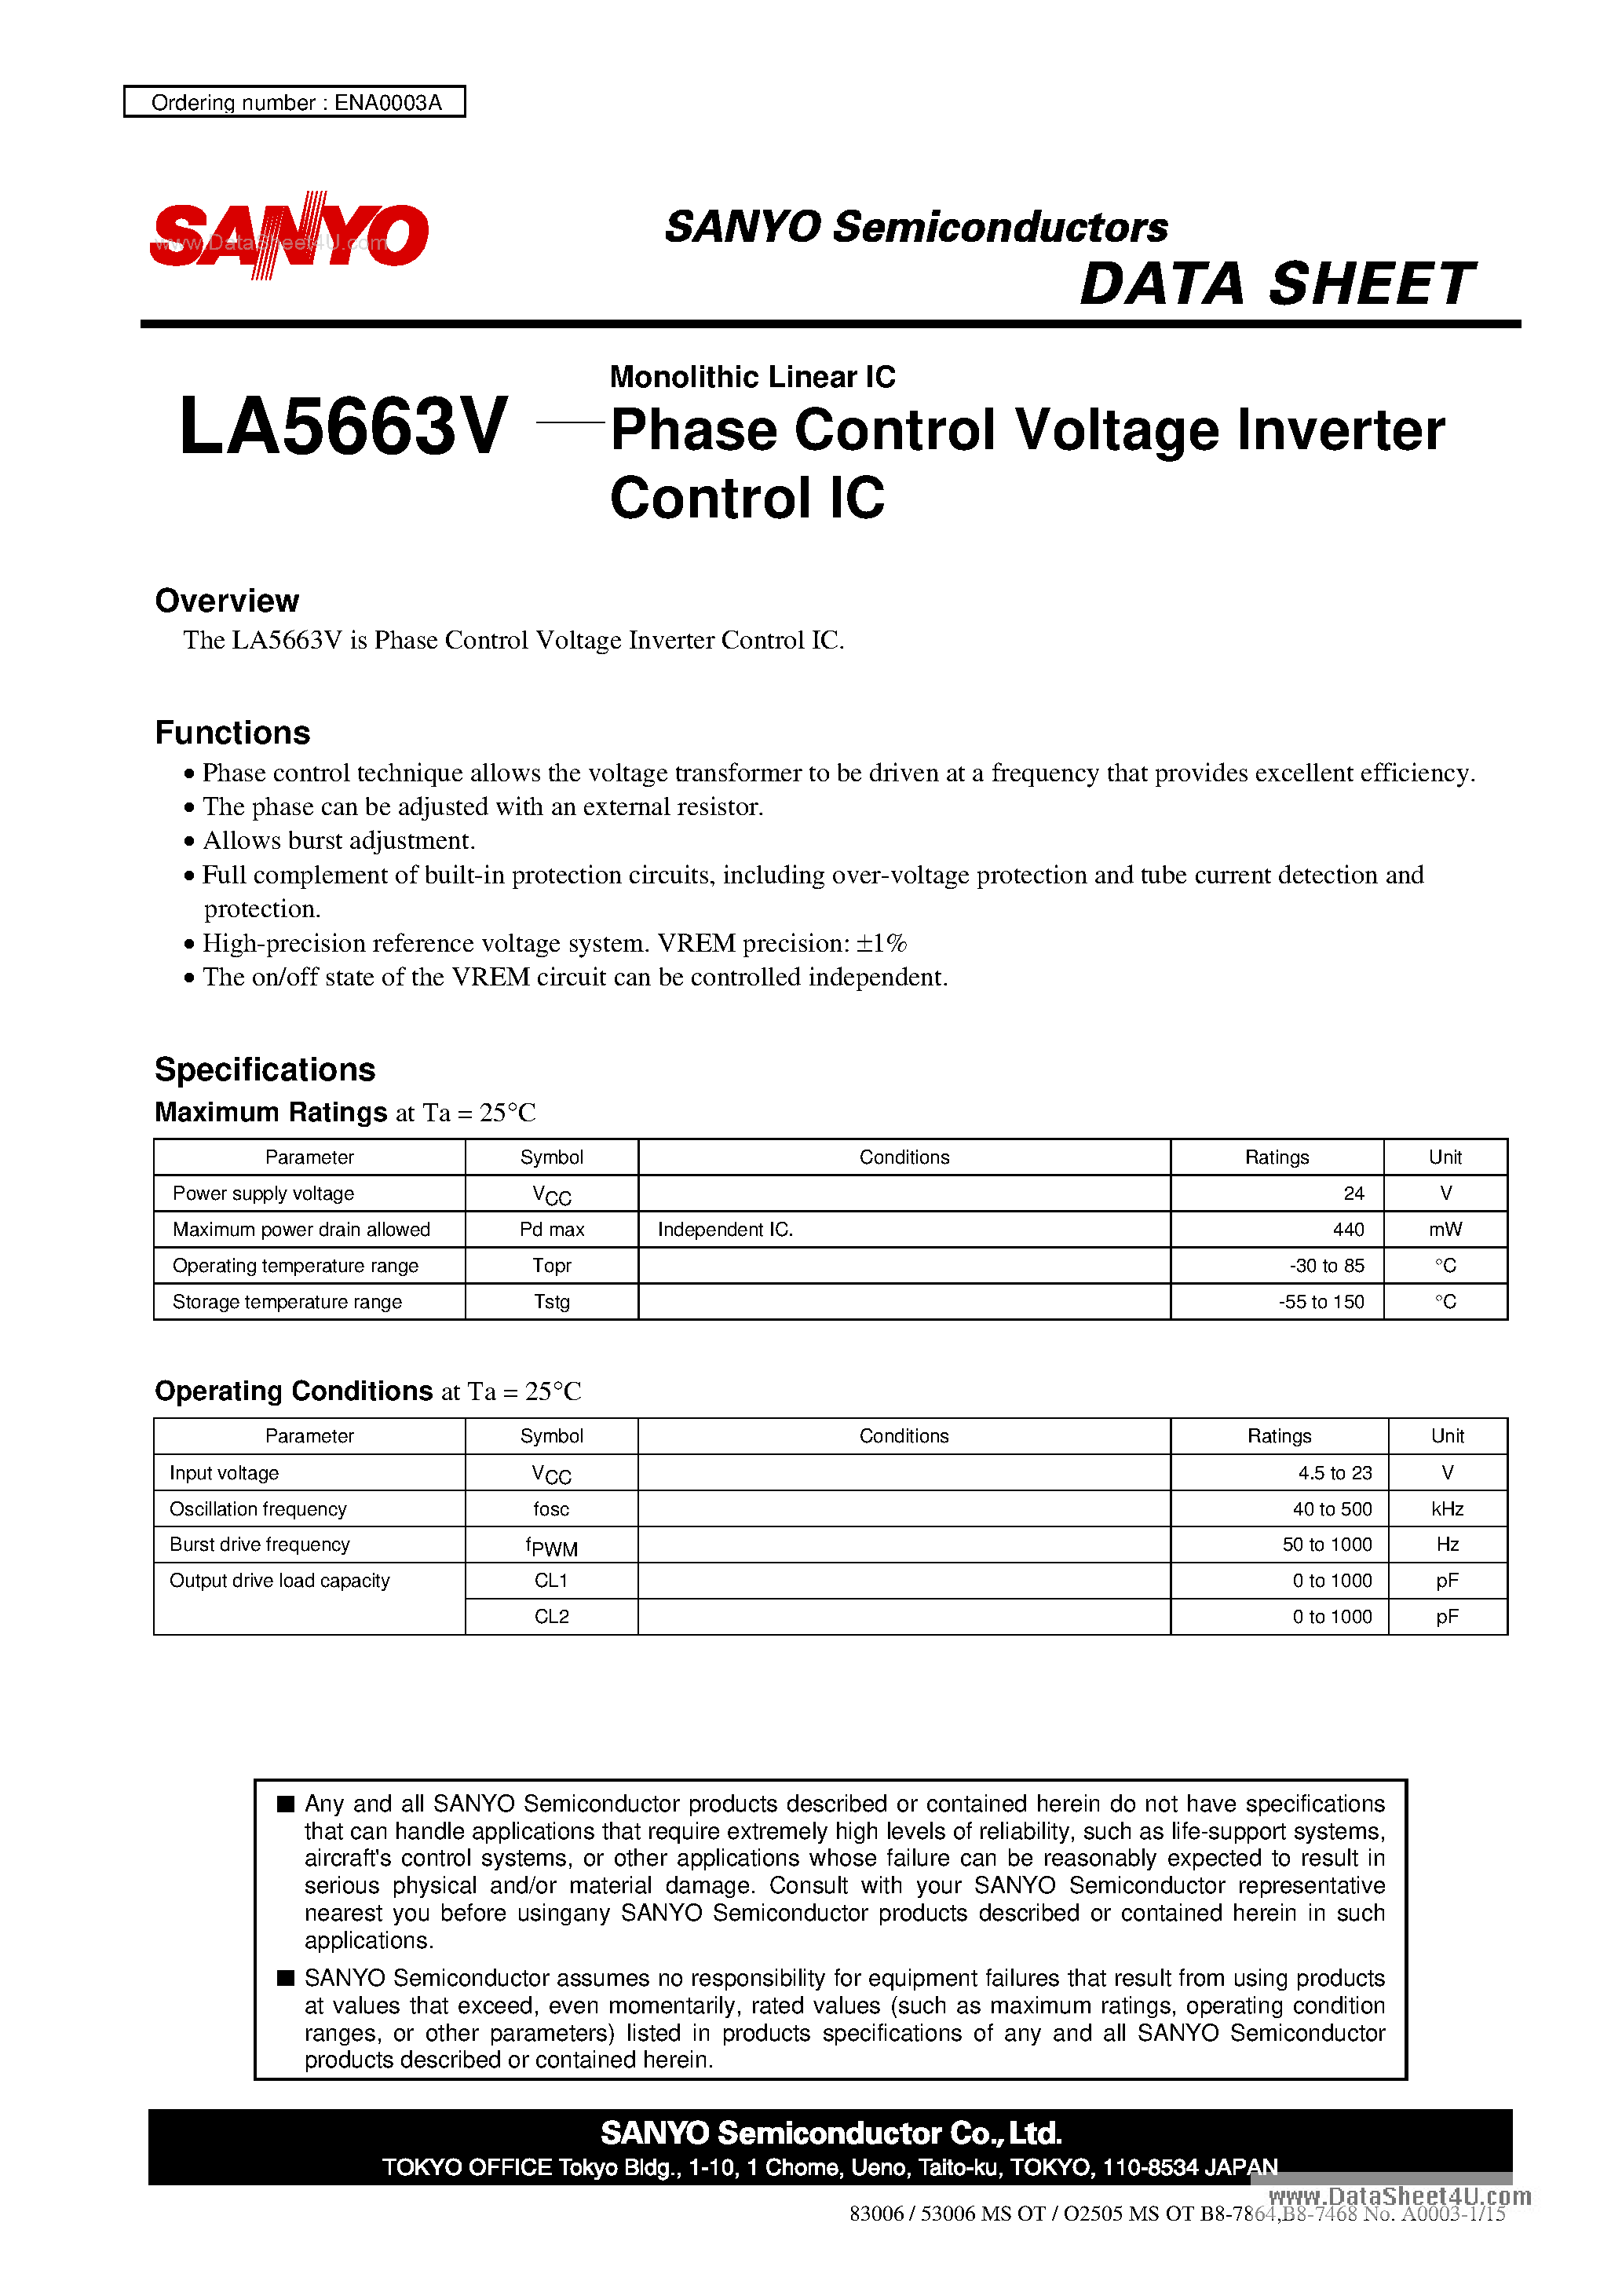 Даташит LA5663V - Monolithic Linear IC Phase Control Voltage Inverter Control IC страница 1